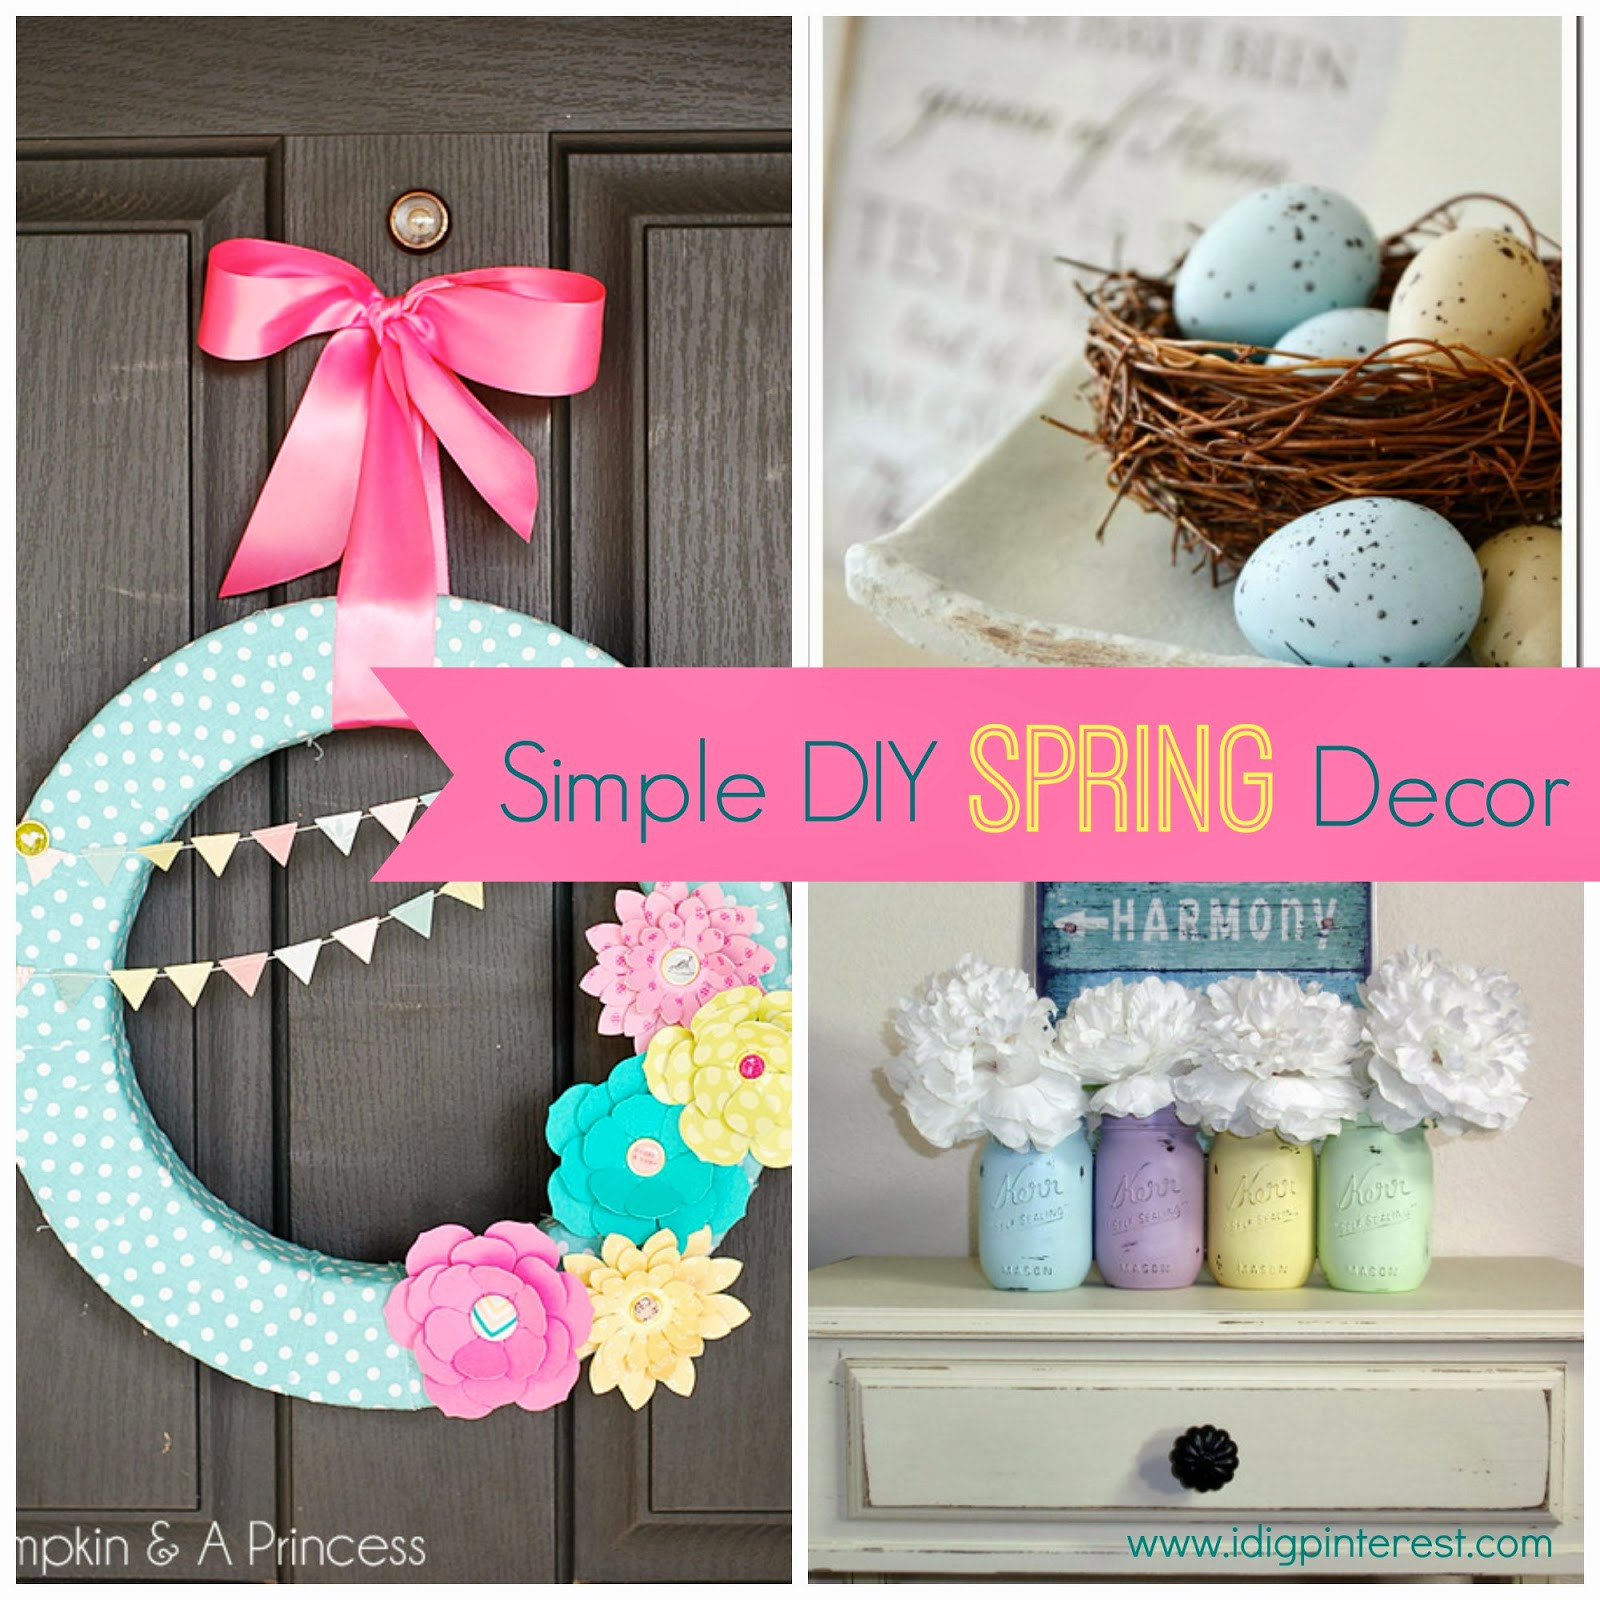 DIY Room Decoration Pinterest
 Simple DIY Spring Decor Ideas I Dig Pinterest